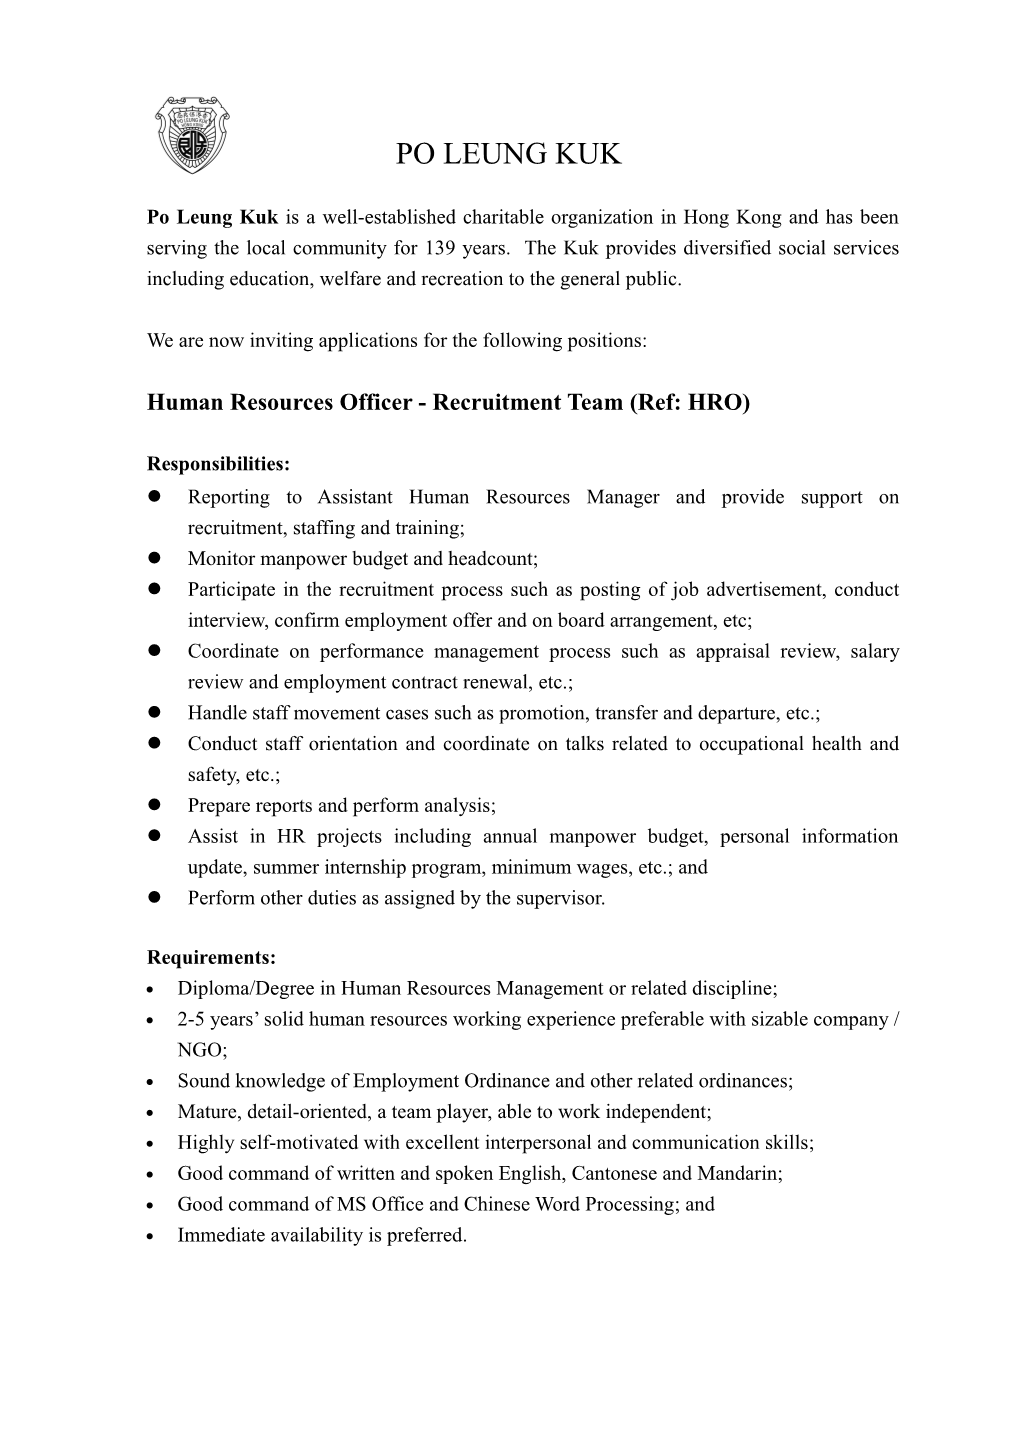 Human Resources Officer -Recruitment Team (Ref: HRO)